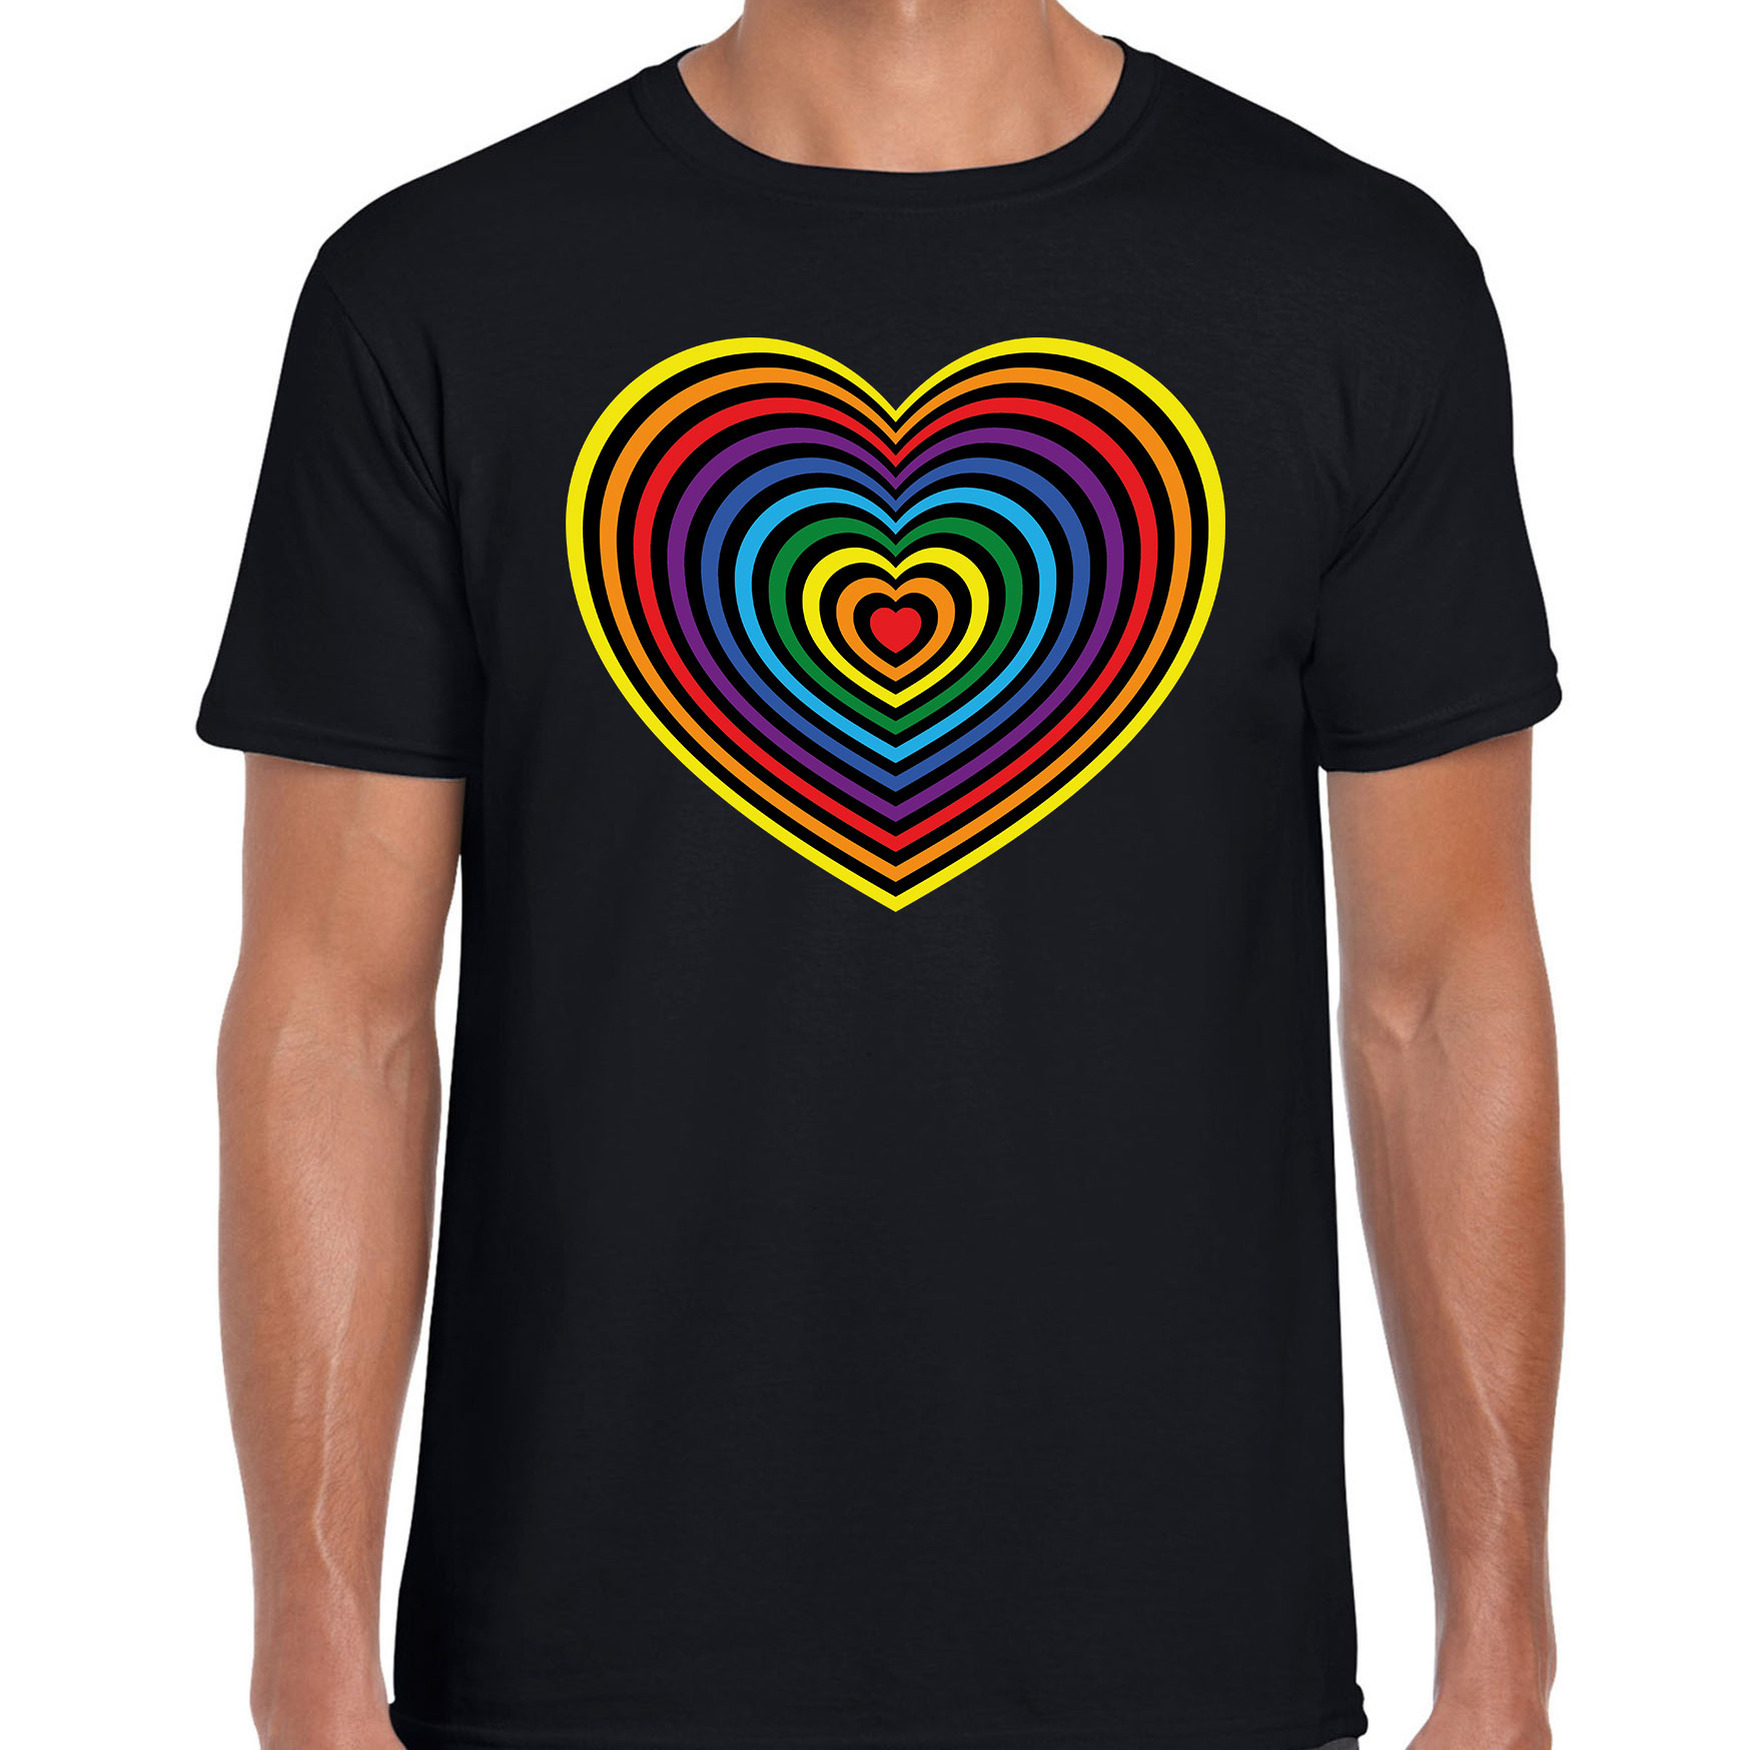 Regenboog hart gay pride - parade zwart t-shirt voor heren - LHBT evenement shirts kleding